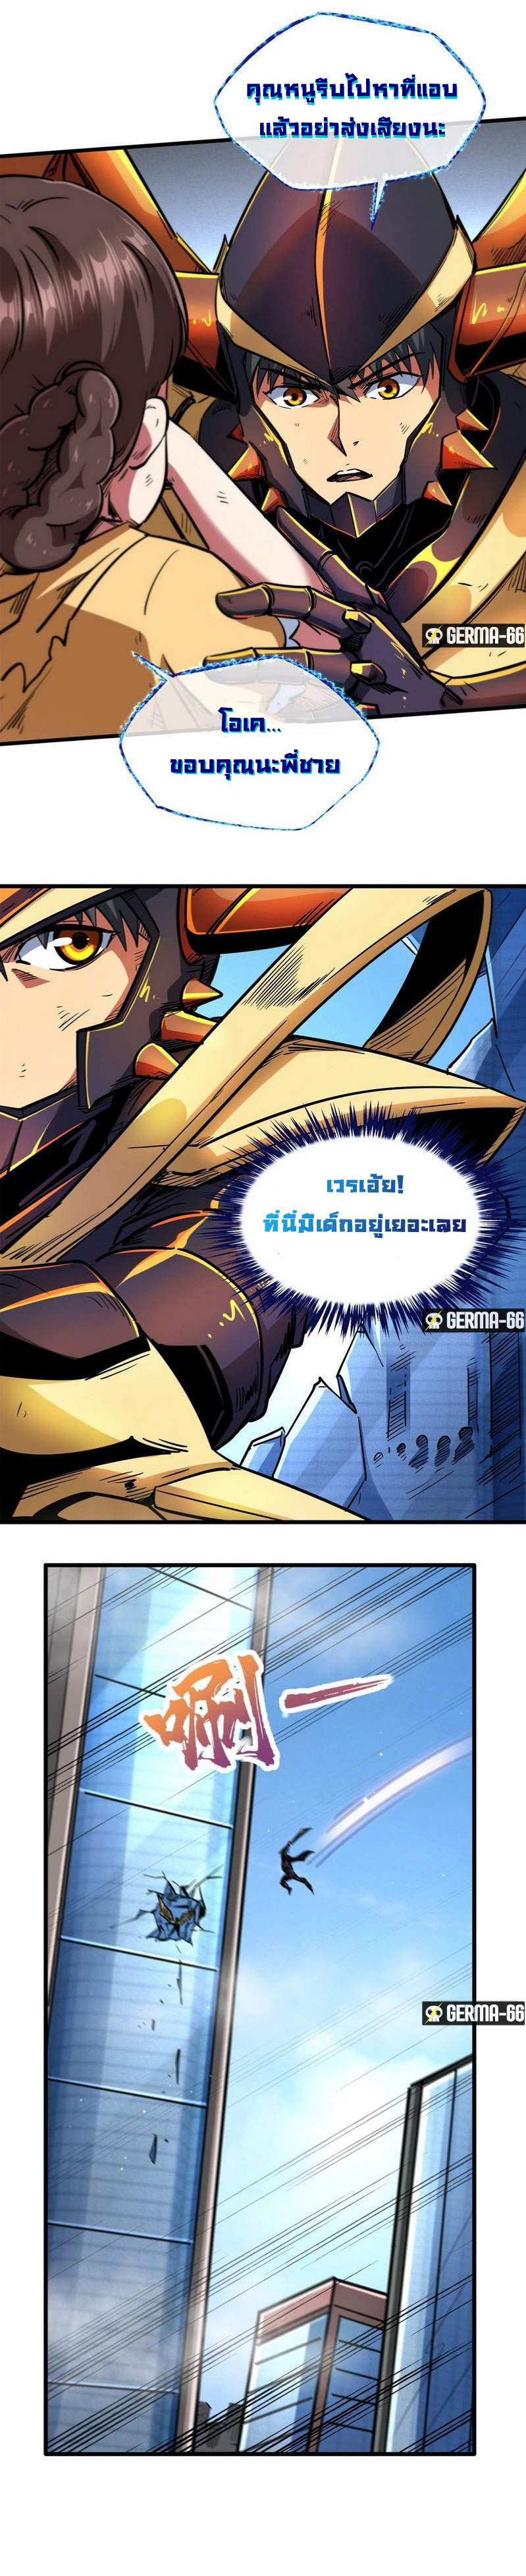 Super God Gene 29 (16)